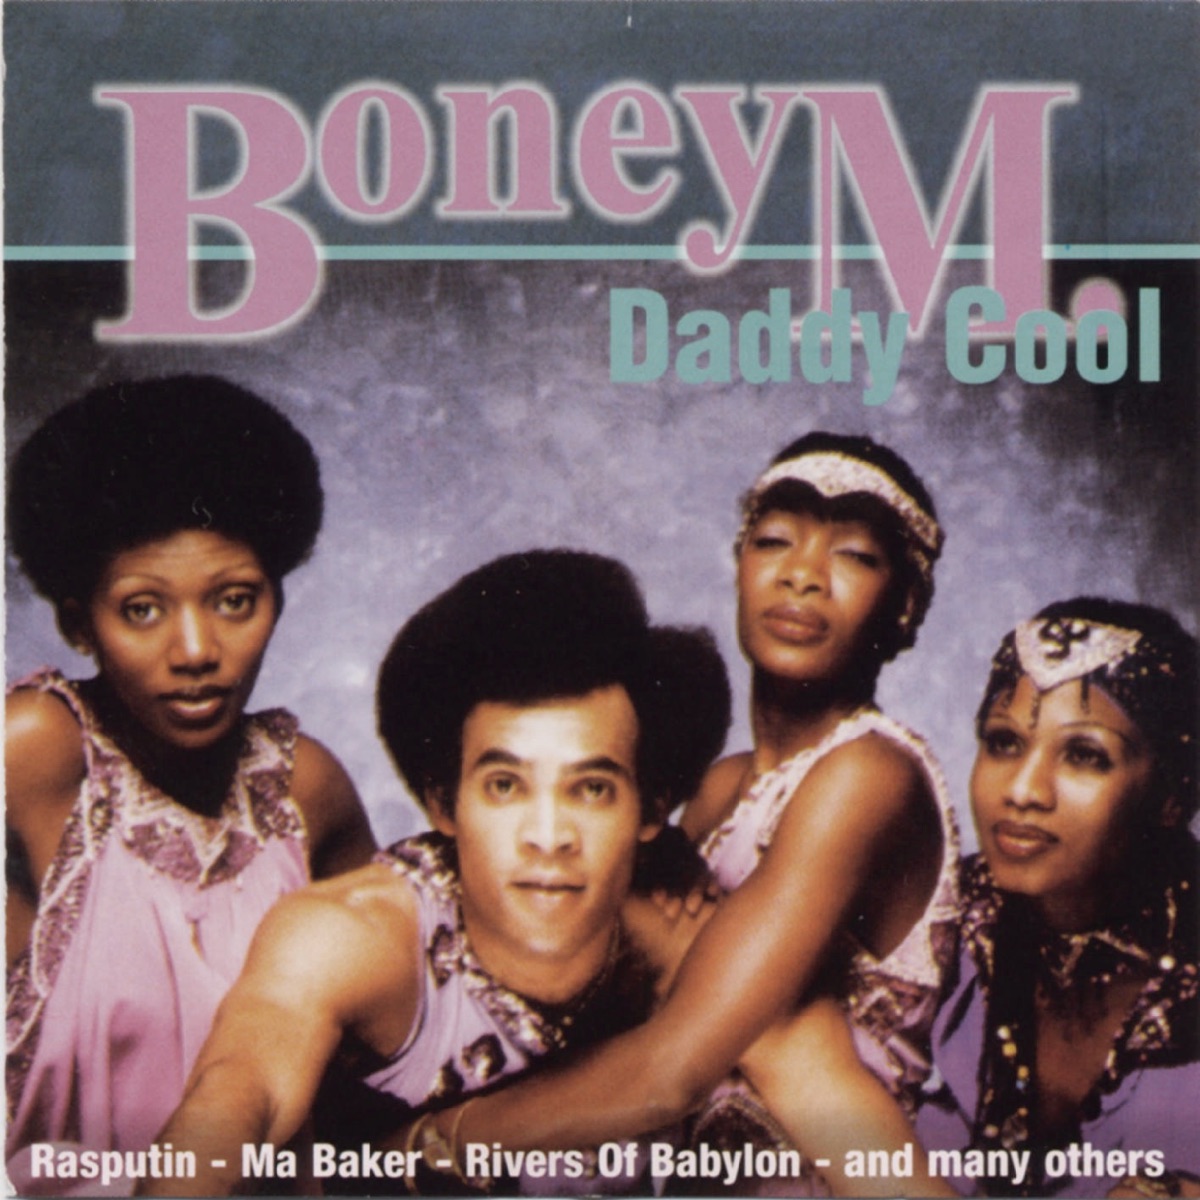 Boney M. Daddy Cool cover artwork